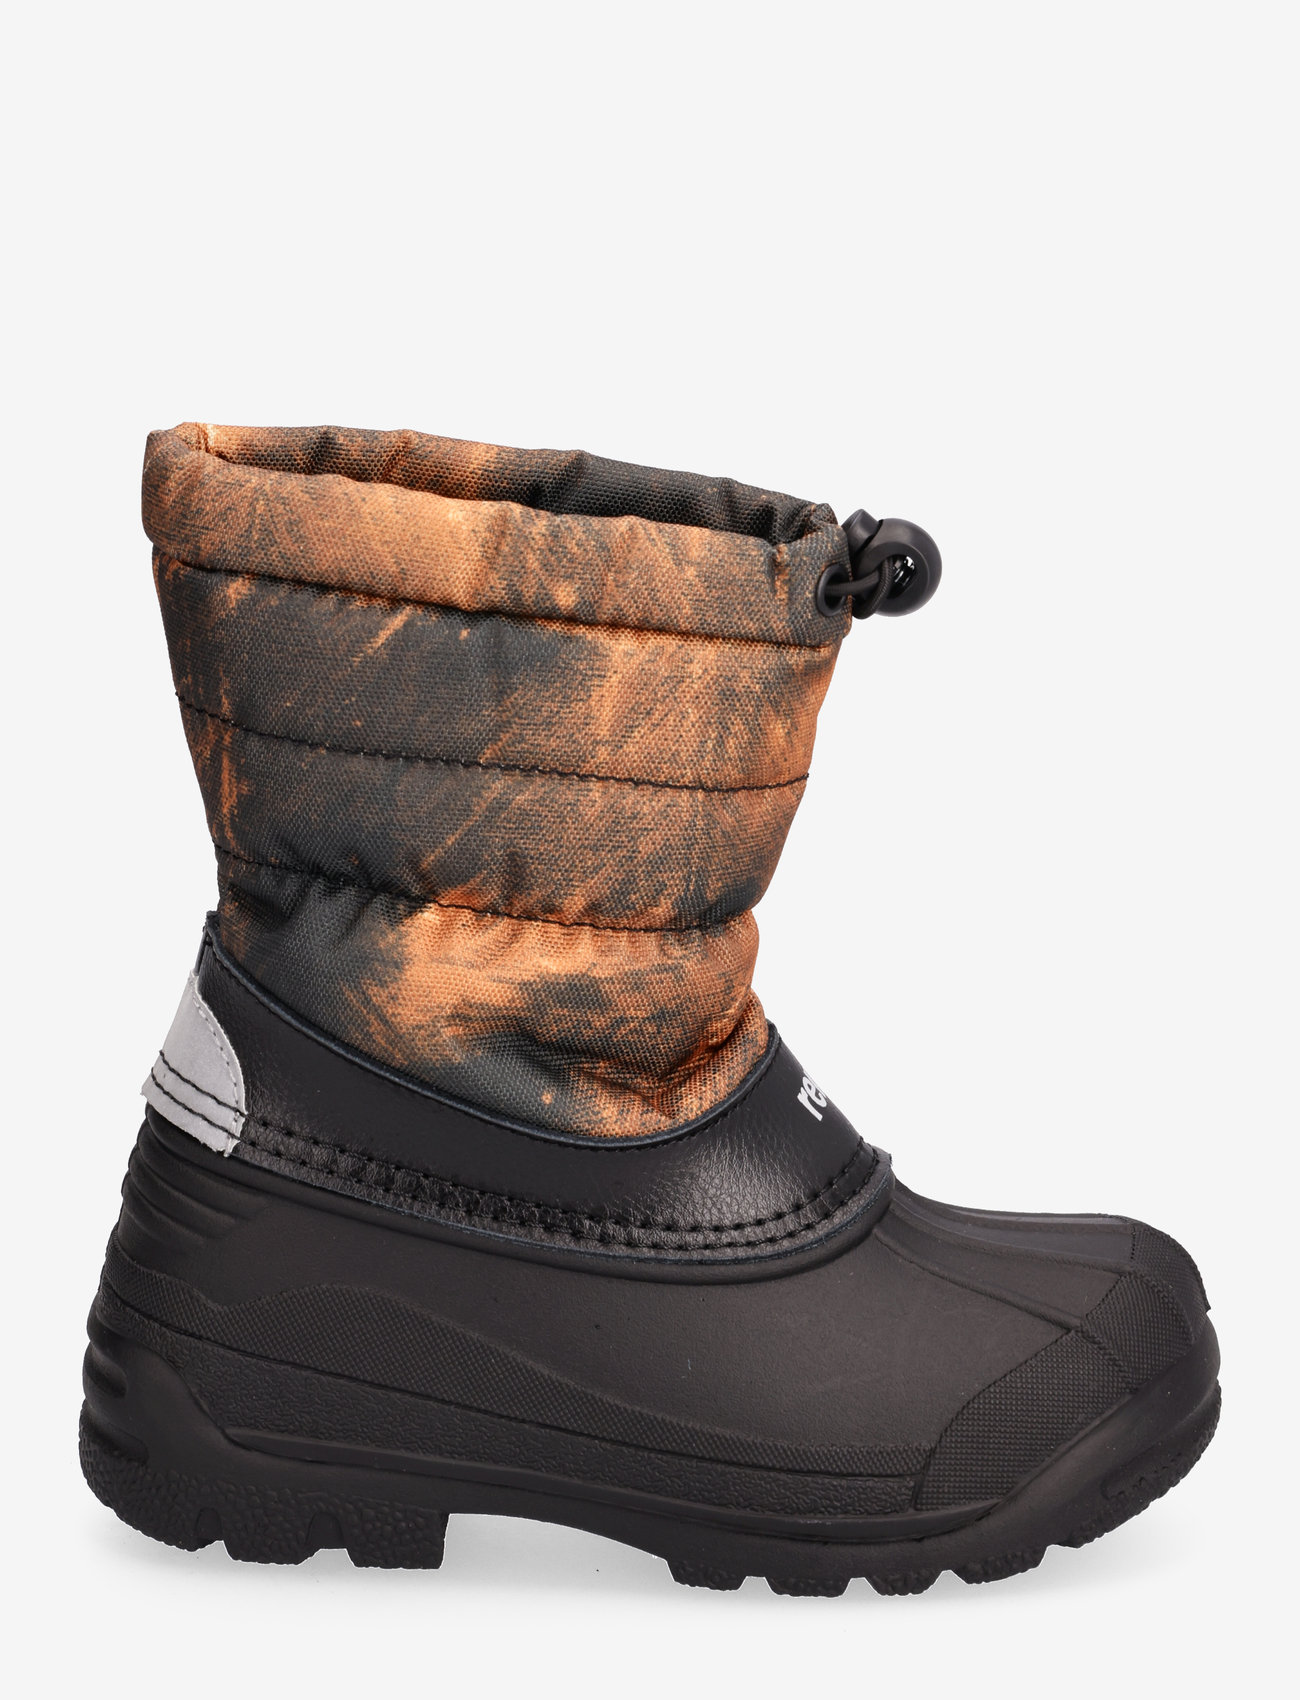 Reima - Winter boots, Nefar - dzieci - cinnamon brown - 1